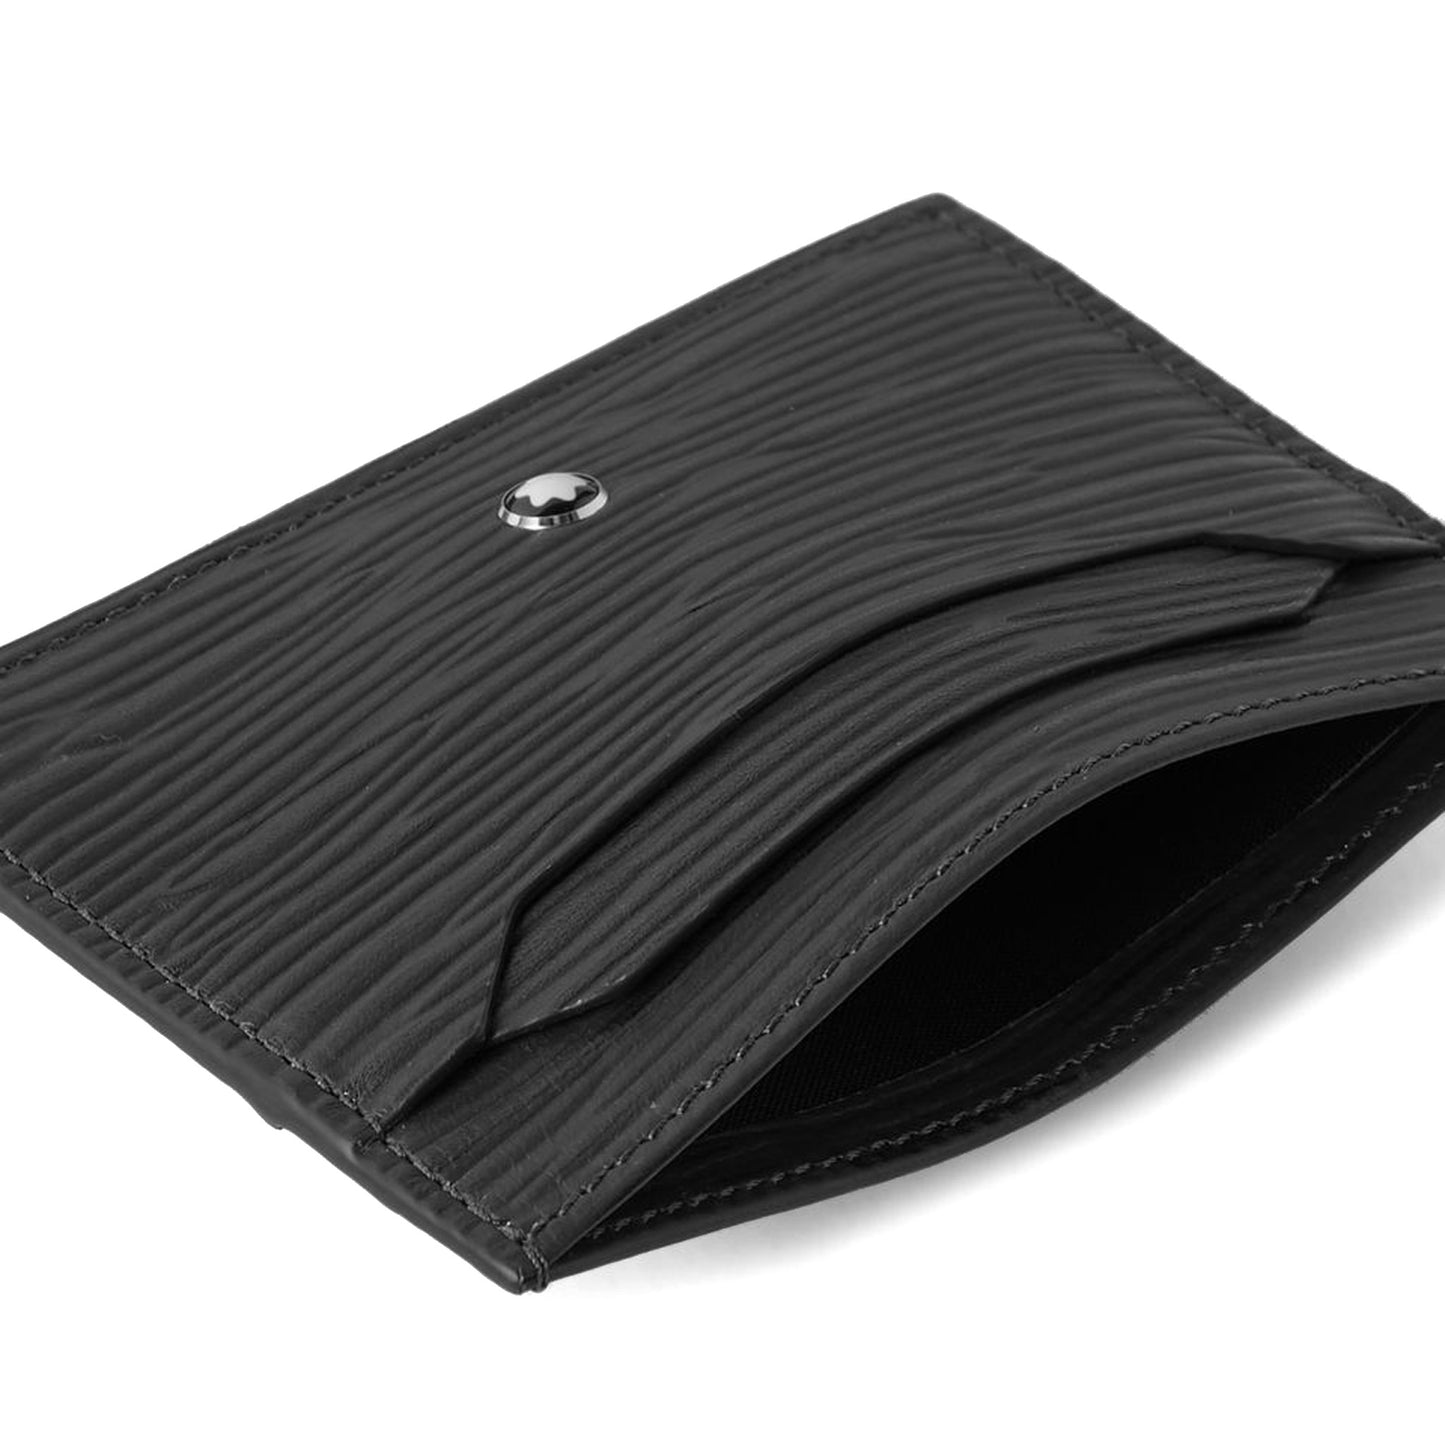 Meisterstück 4810 Textured-Leather Cardholder Black